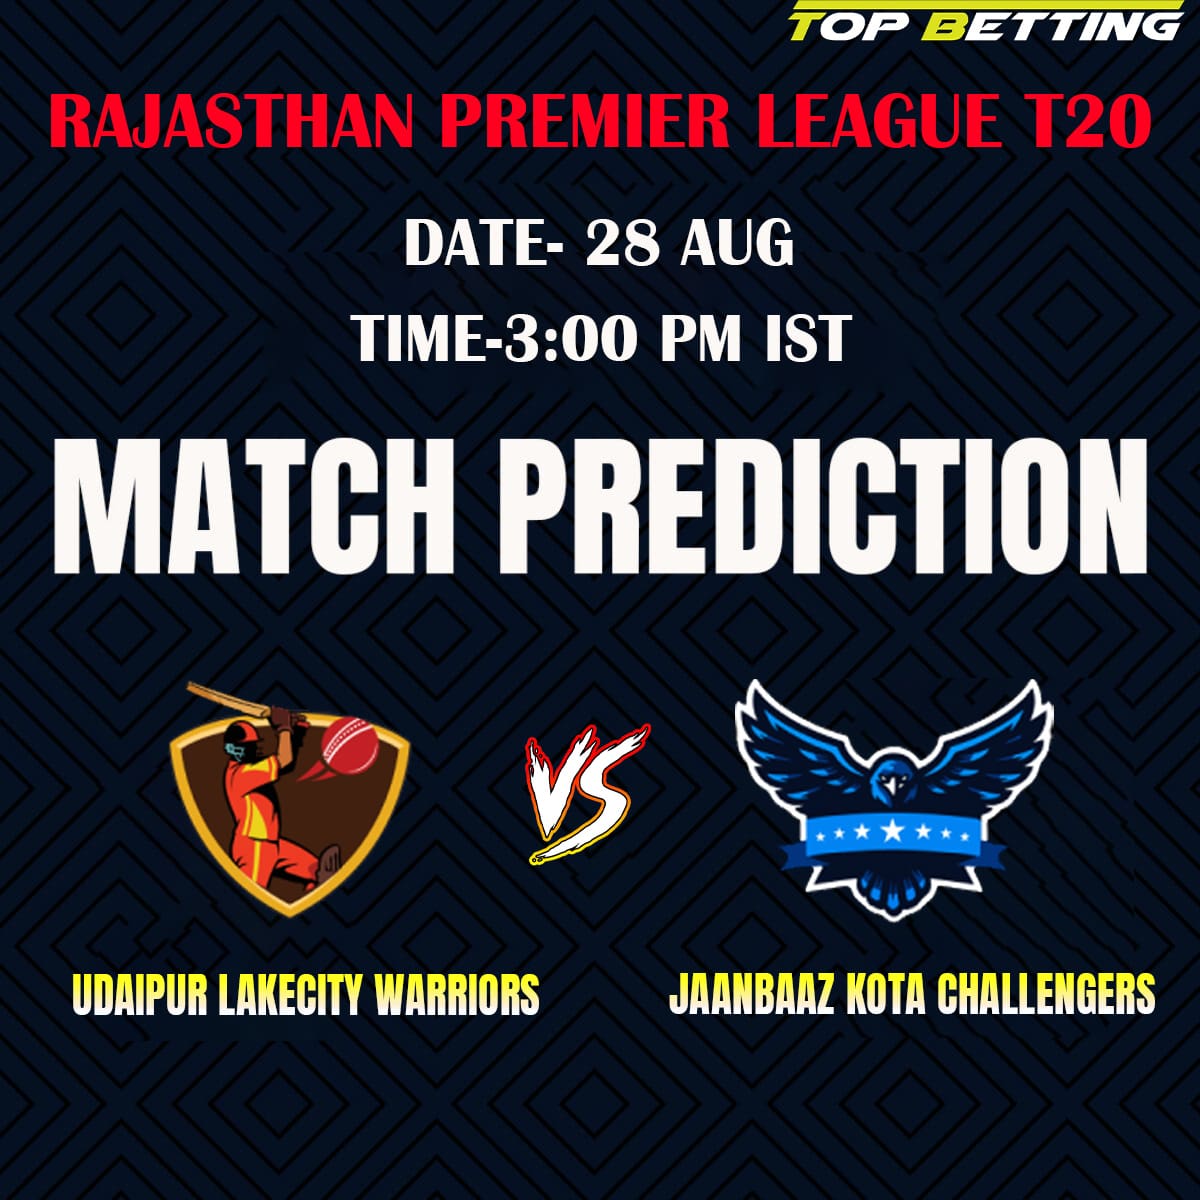 Udaipur Lakecity Warriors vs. Jaanbaaz Kota Challengers – Rajasthan Premier League Match Prediction